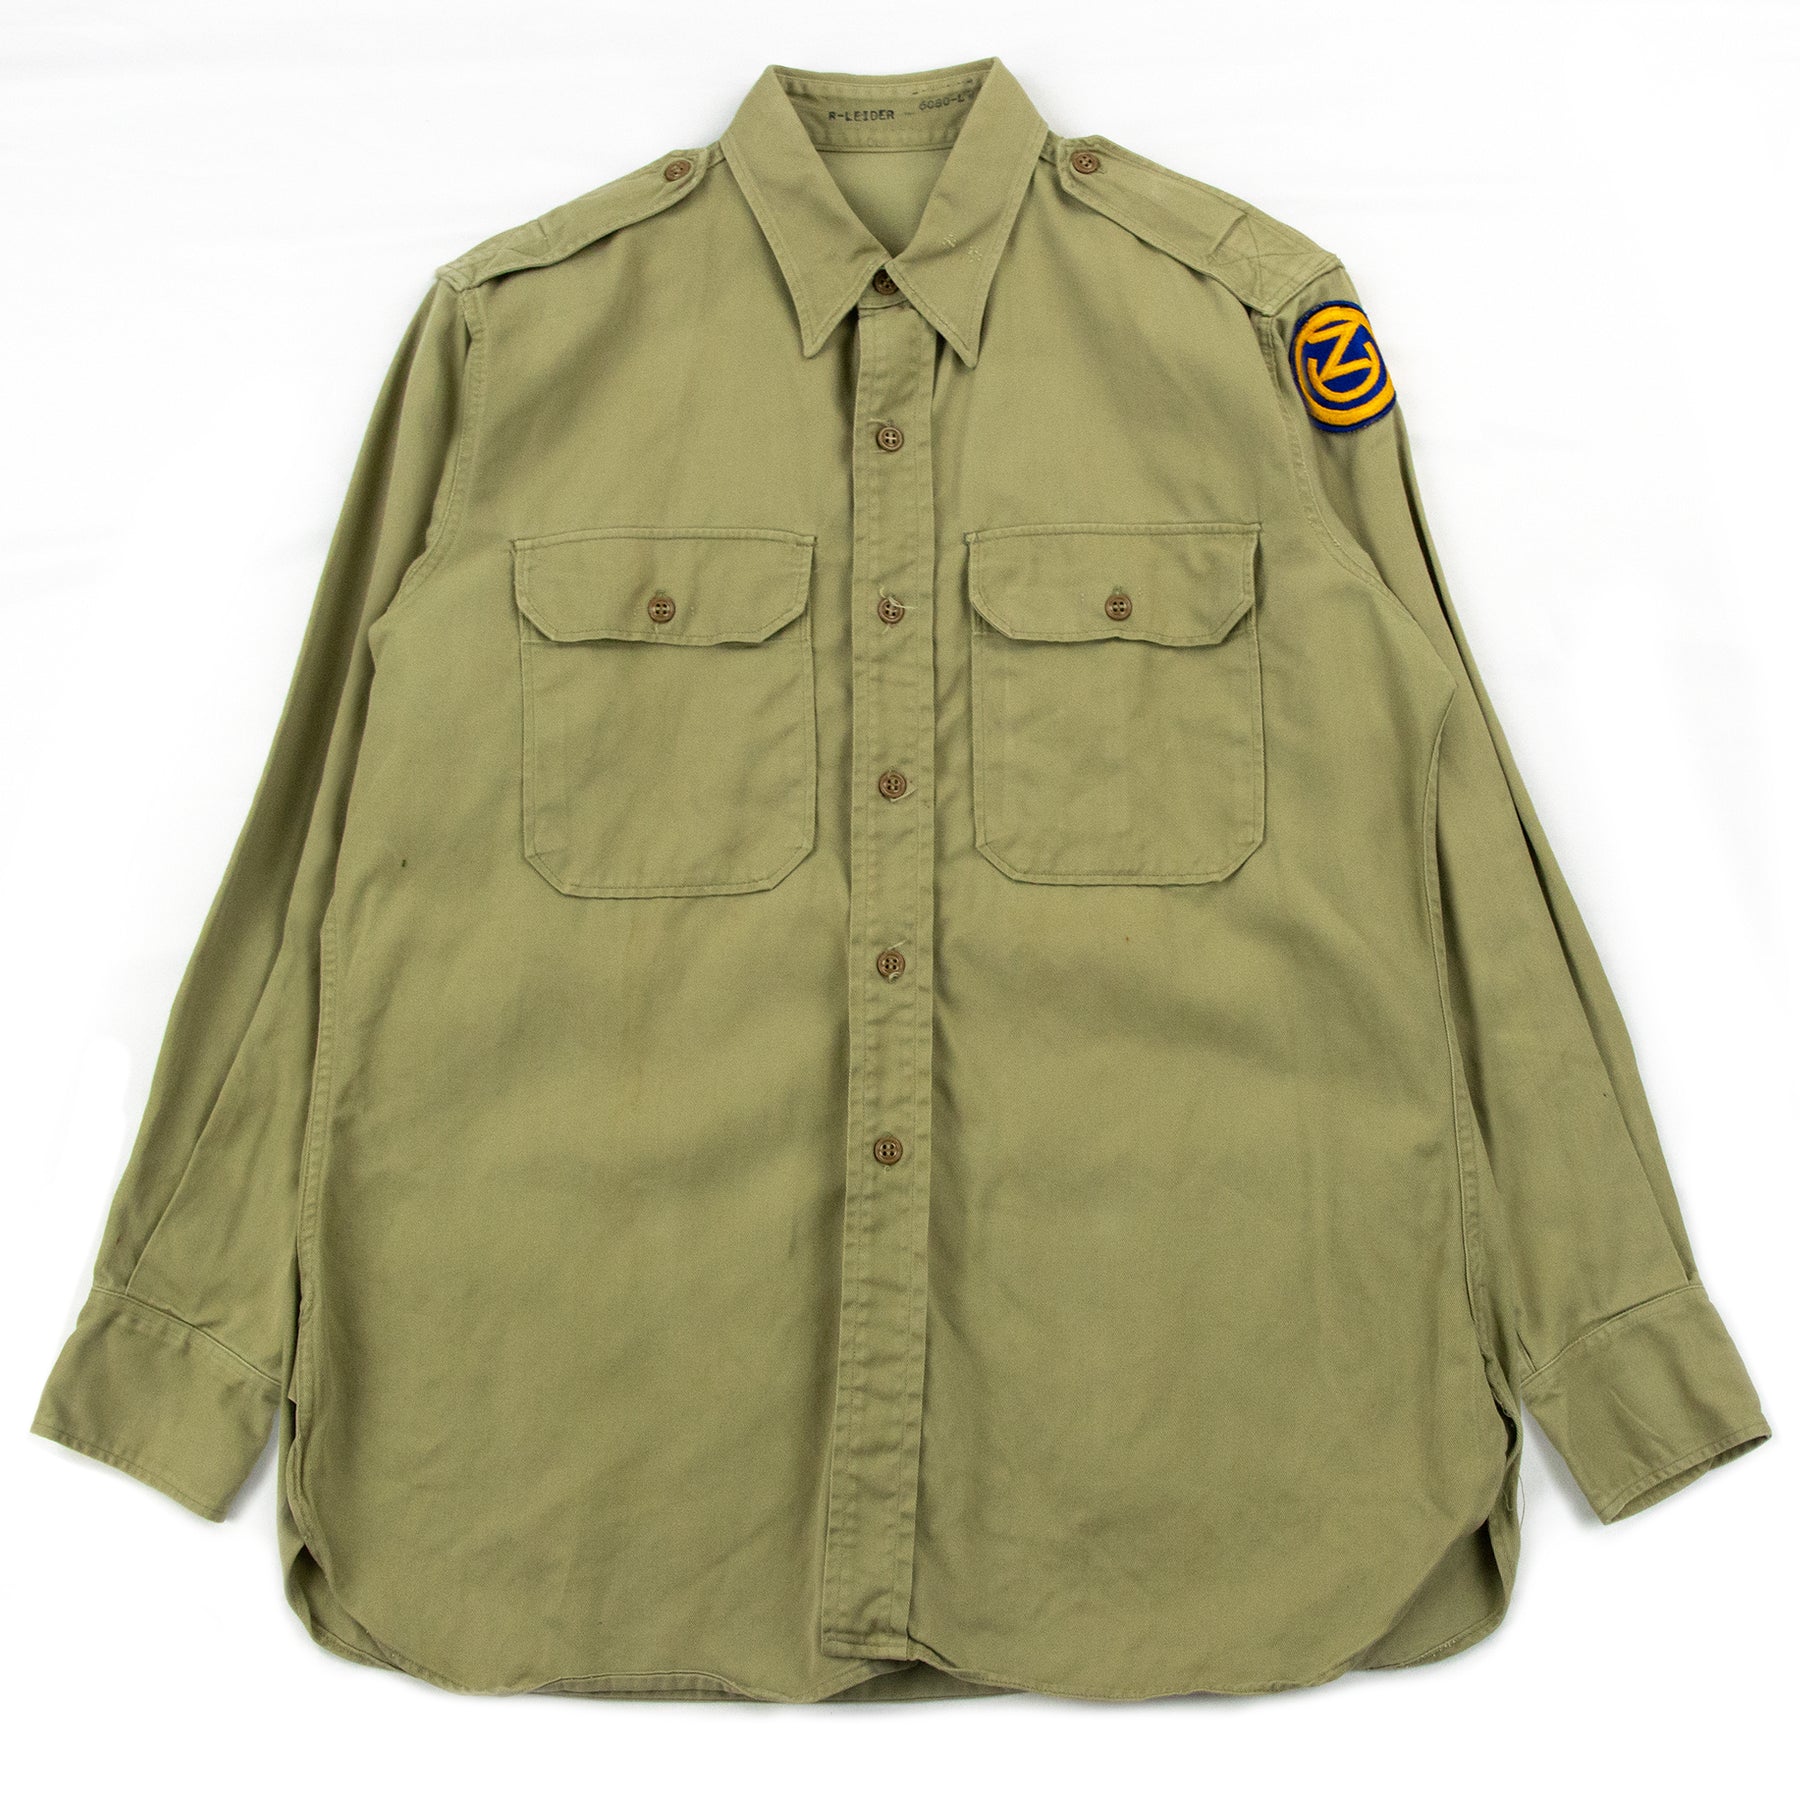 Vintage 50s US Army Khaki Cotton Twill Military Field Shirt - M